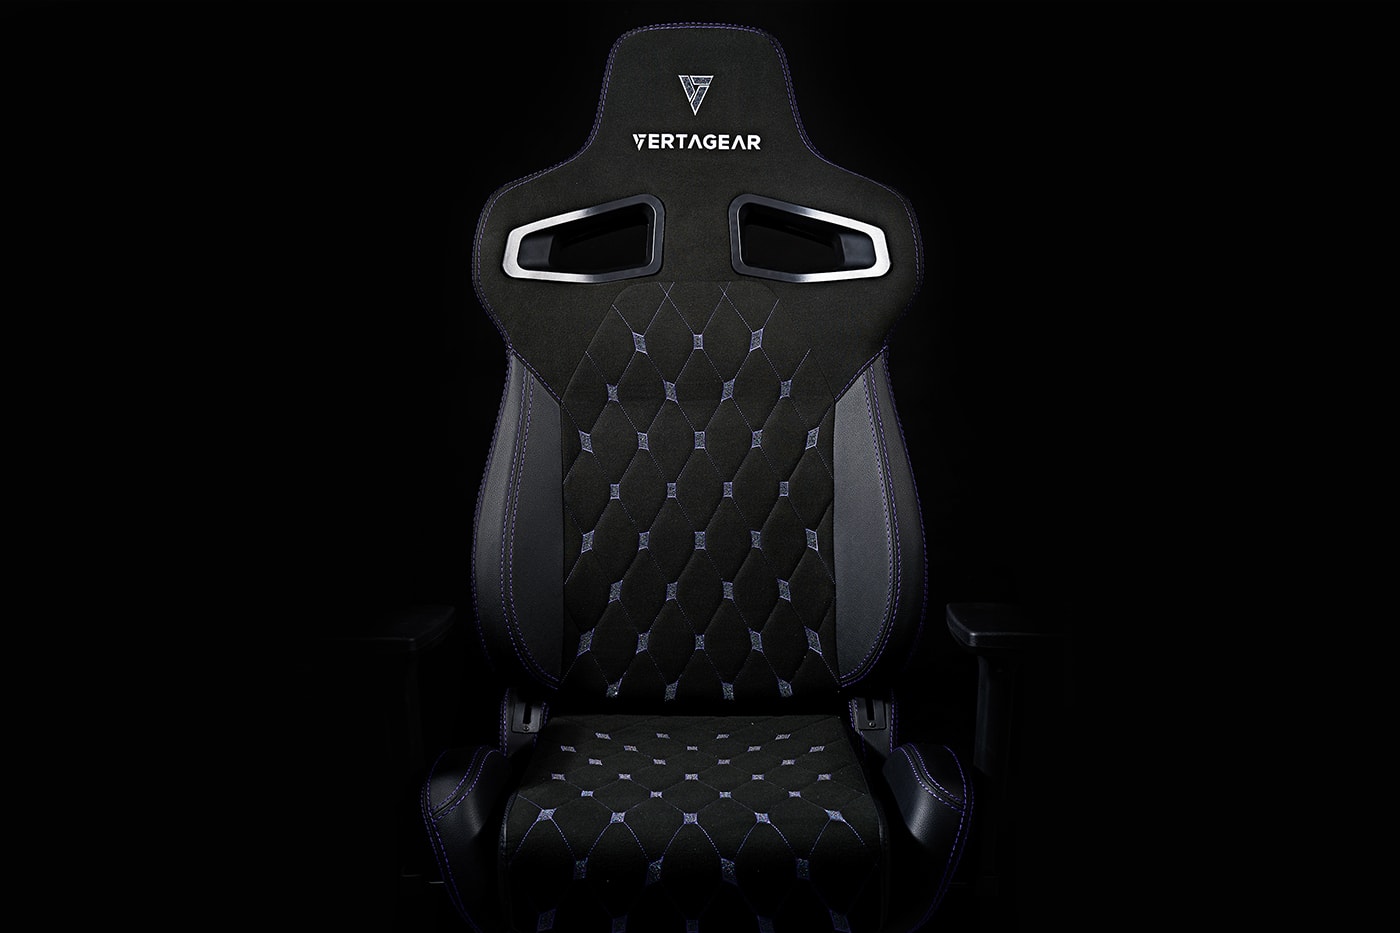 vertagear swarovski gaming chair racing seat crystal diamond special edition PL4500 HygennX Coffee Fiber Padding Release Buy